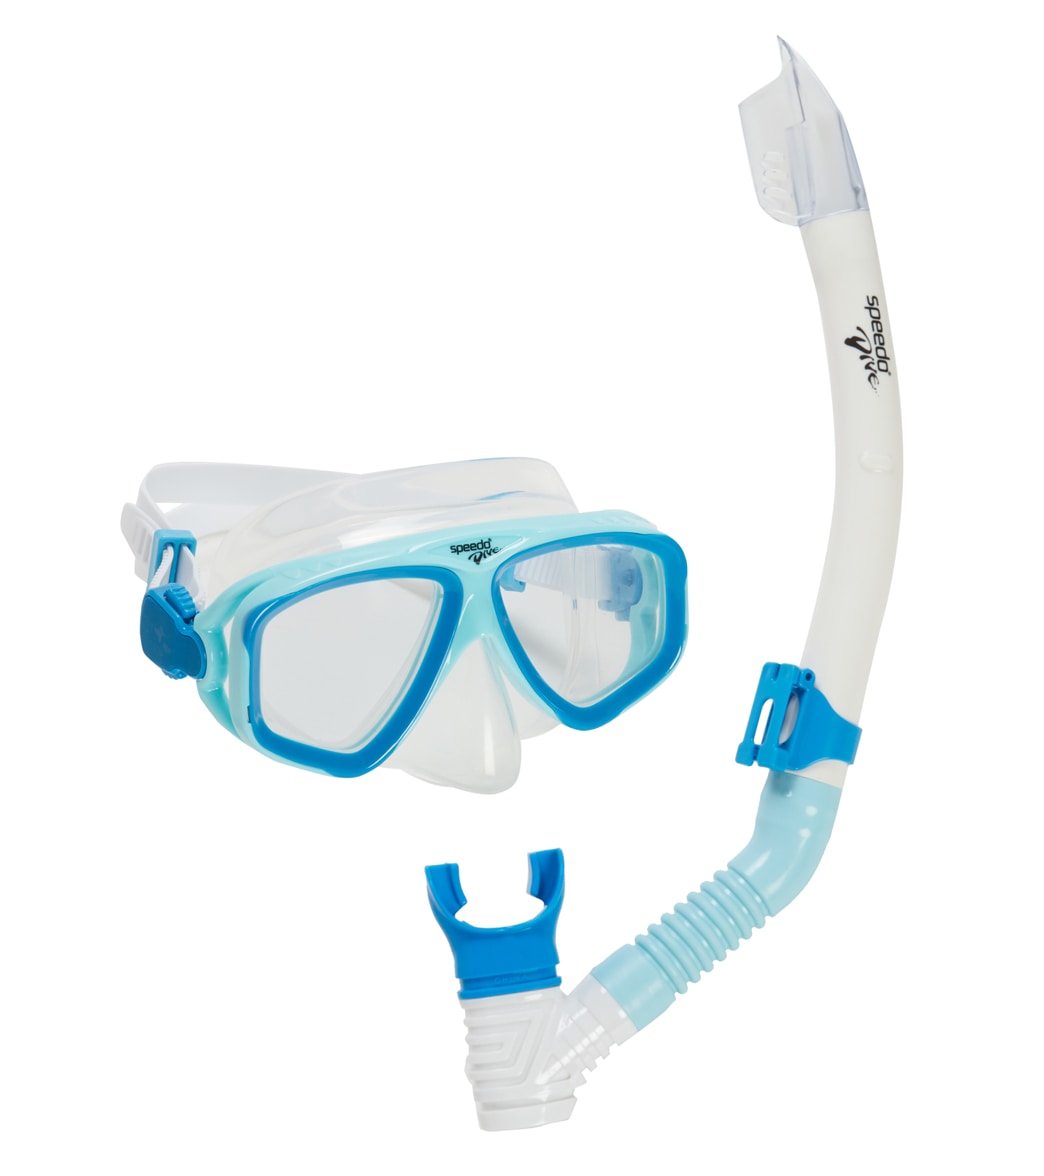 Speedo Adult Adventure Mask Set - Cool Blue/Clear - Swimoutlet.com